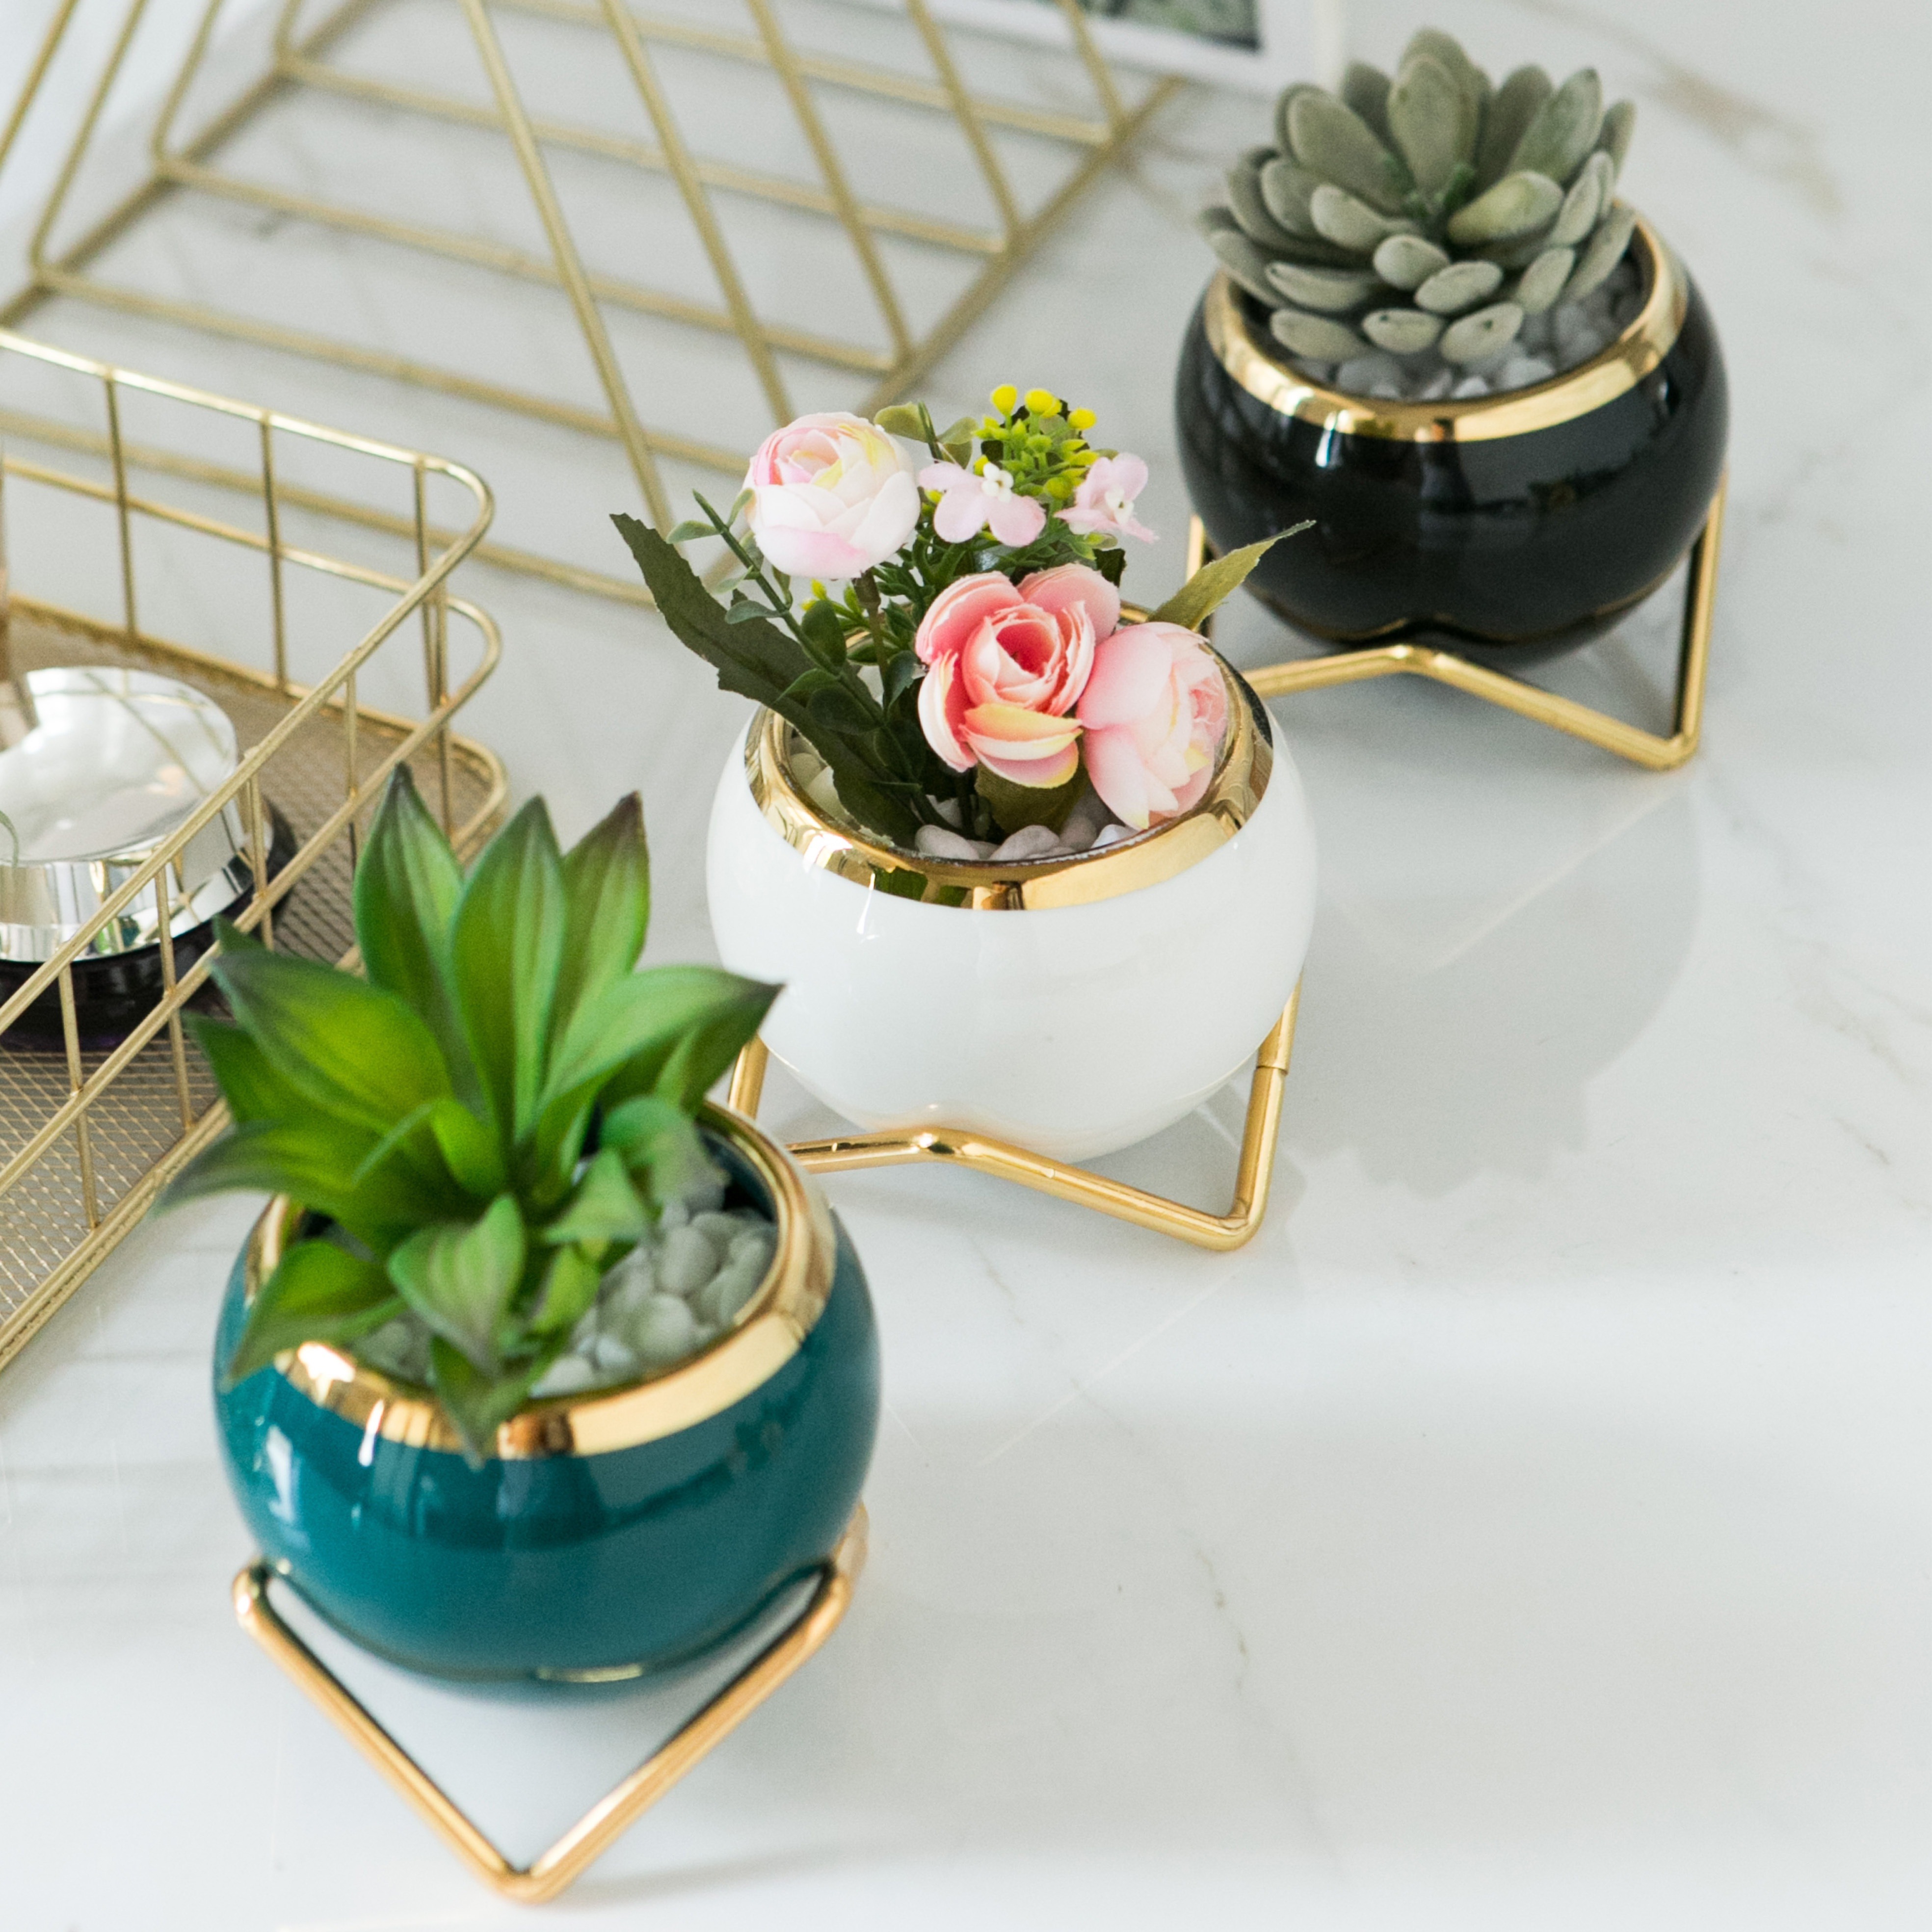 

3pcs/set, Porcelain Succulent Flower Pots Set, Creative Flower Pots With Stainless Steel Golden Flowerpot Bracket, Mini Plant Pots Suitable For Indoor And Outdoor Balconies, (no Plants Included)